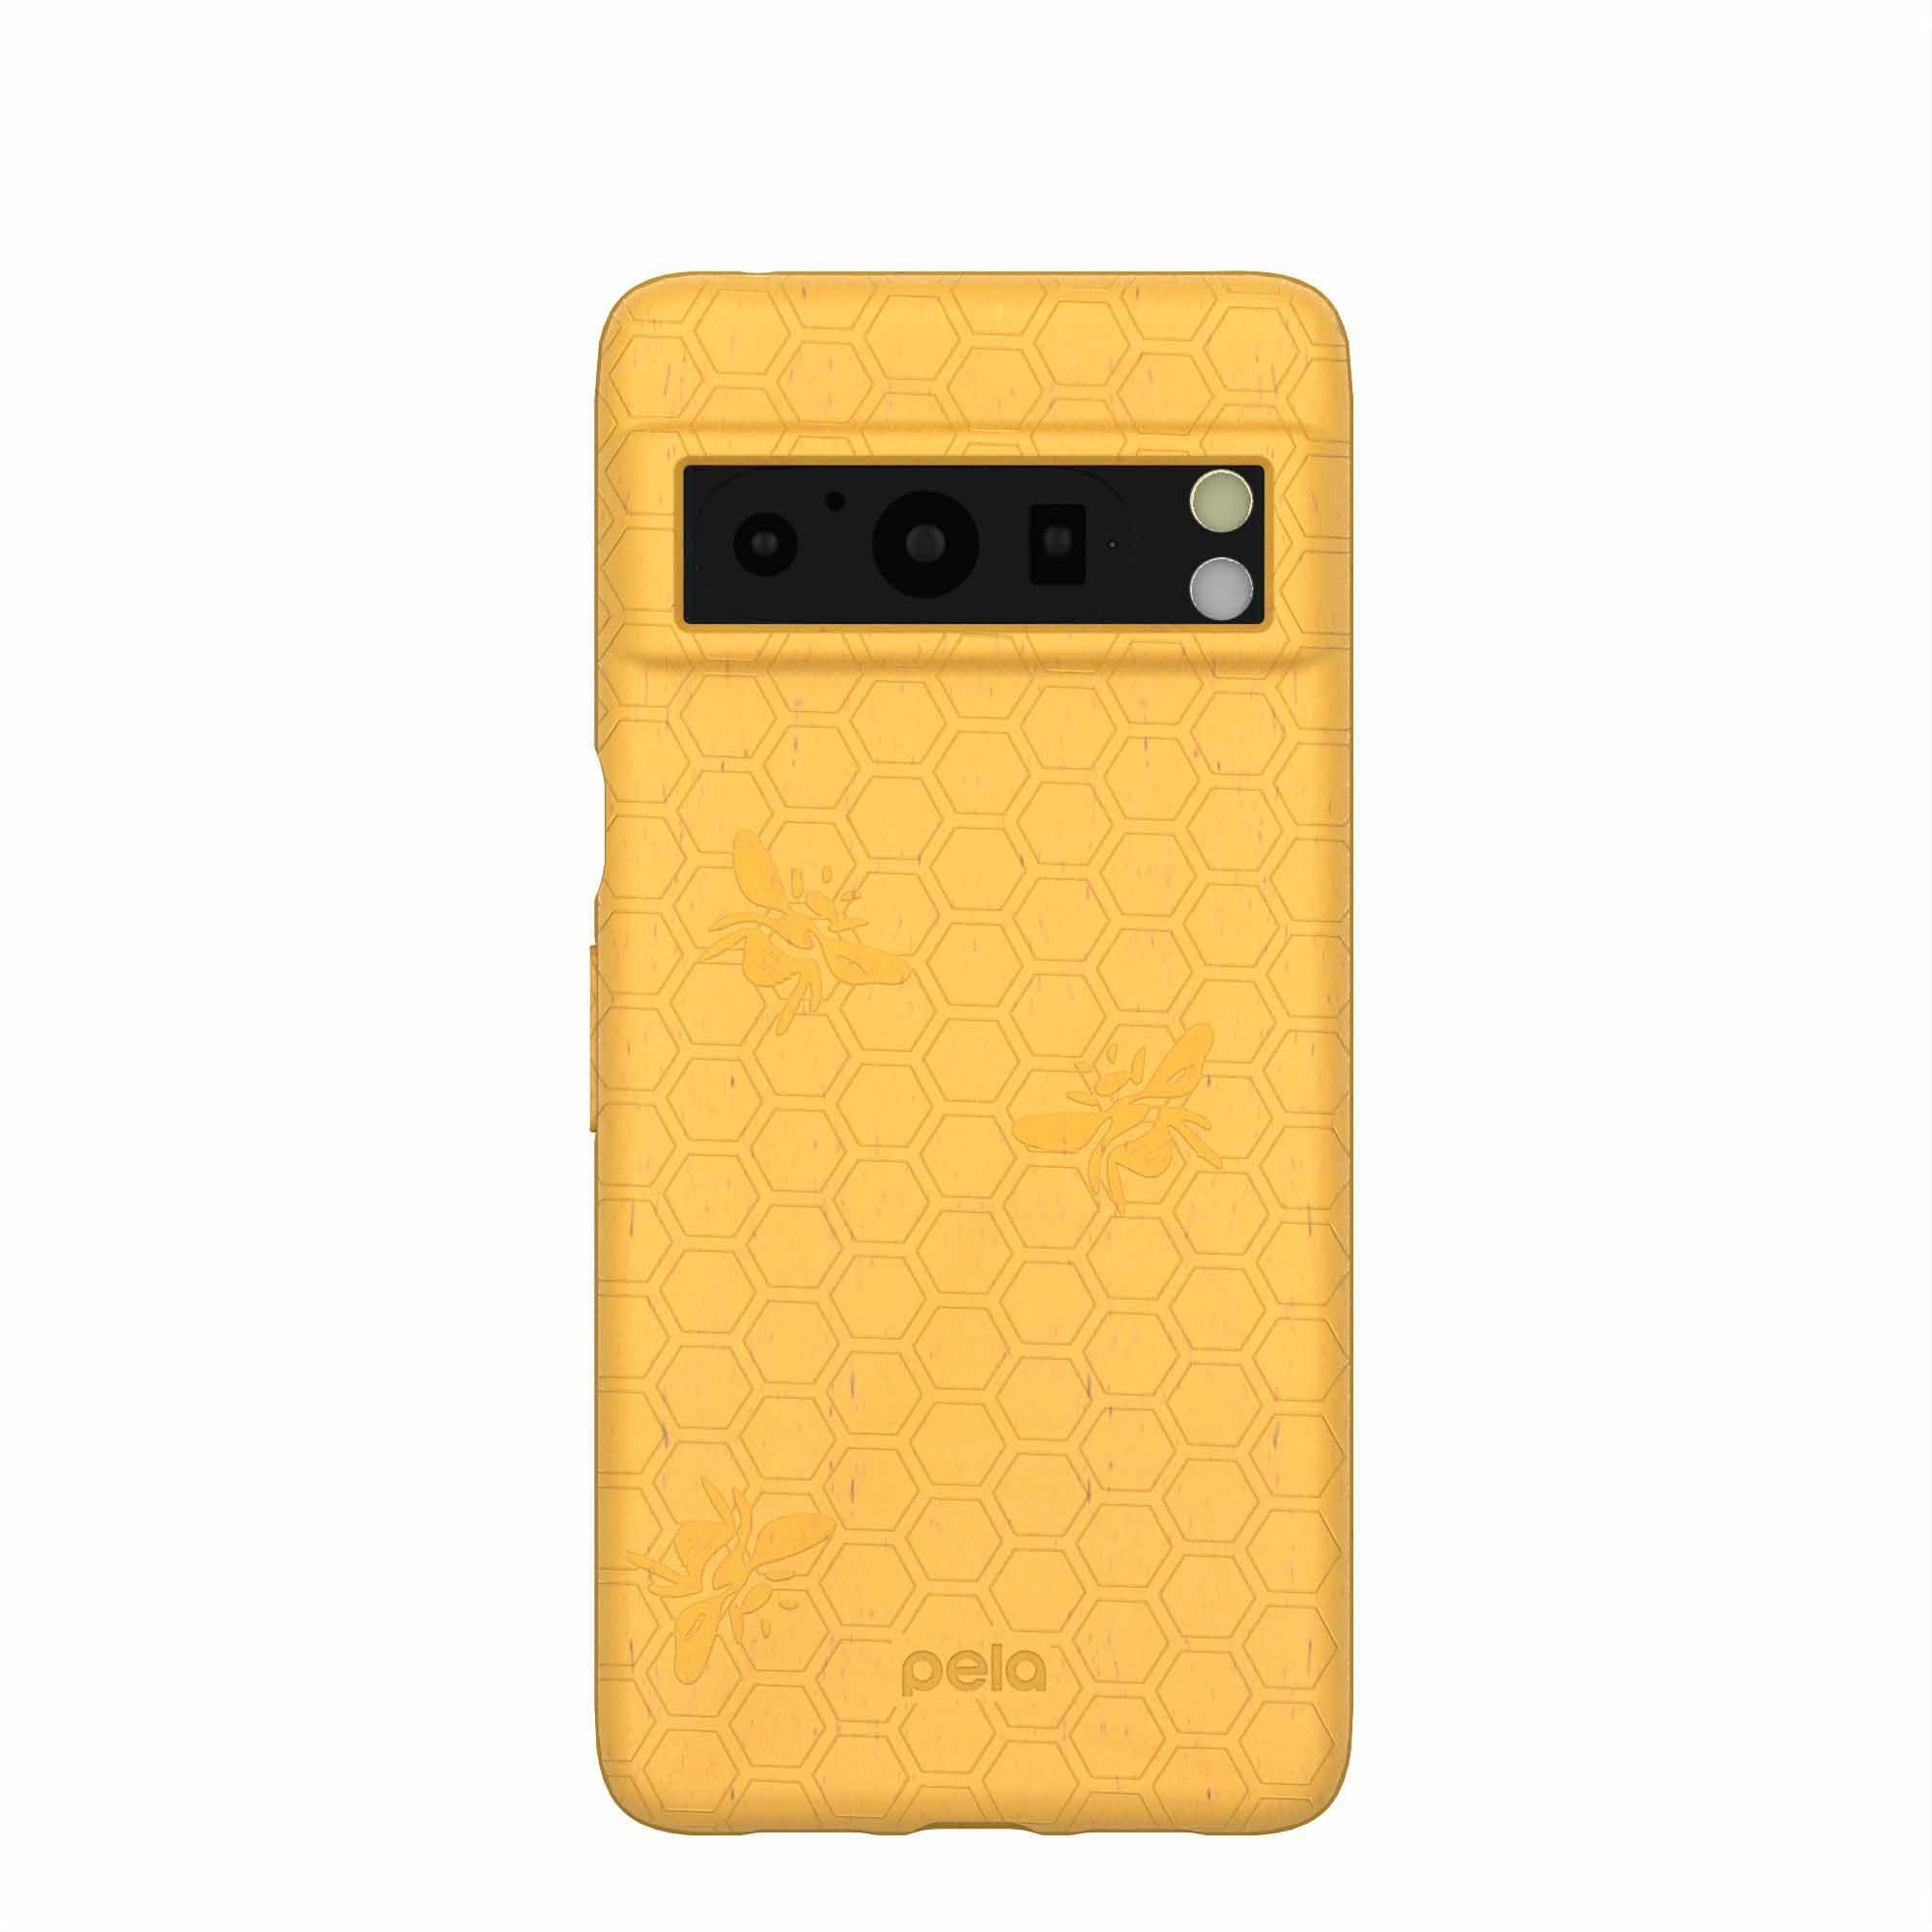 Pela Case | iPhone 12 Pro Max Honey (Bee Edition) Wallet Compostable